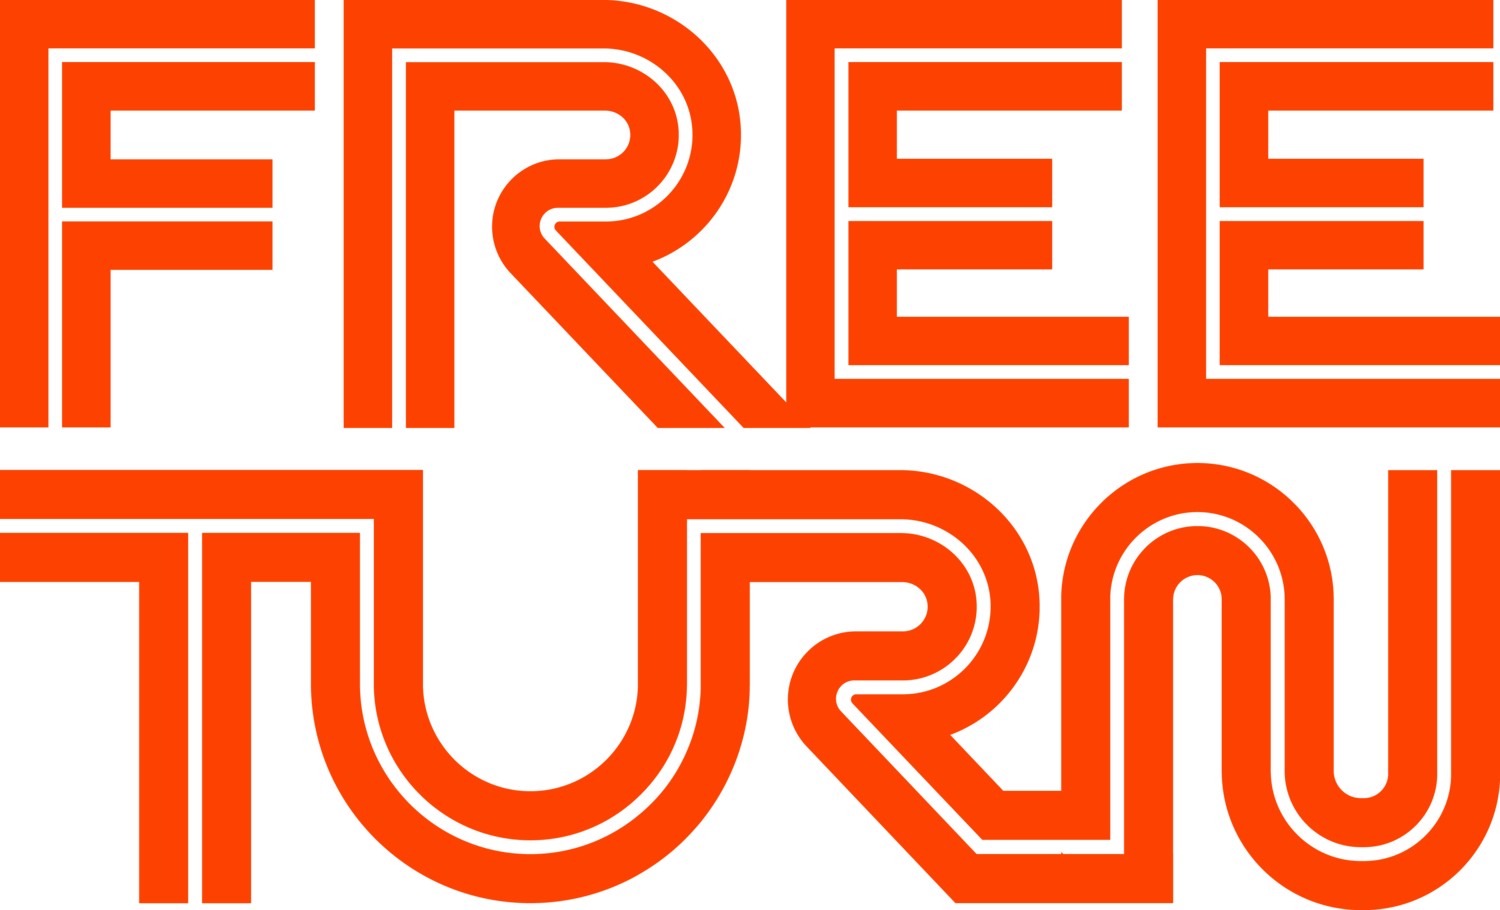 Free Turn - An entertainment company